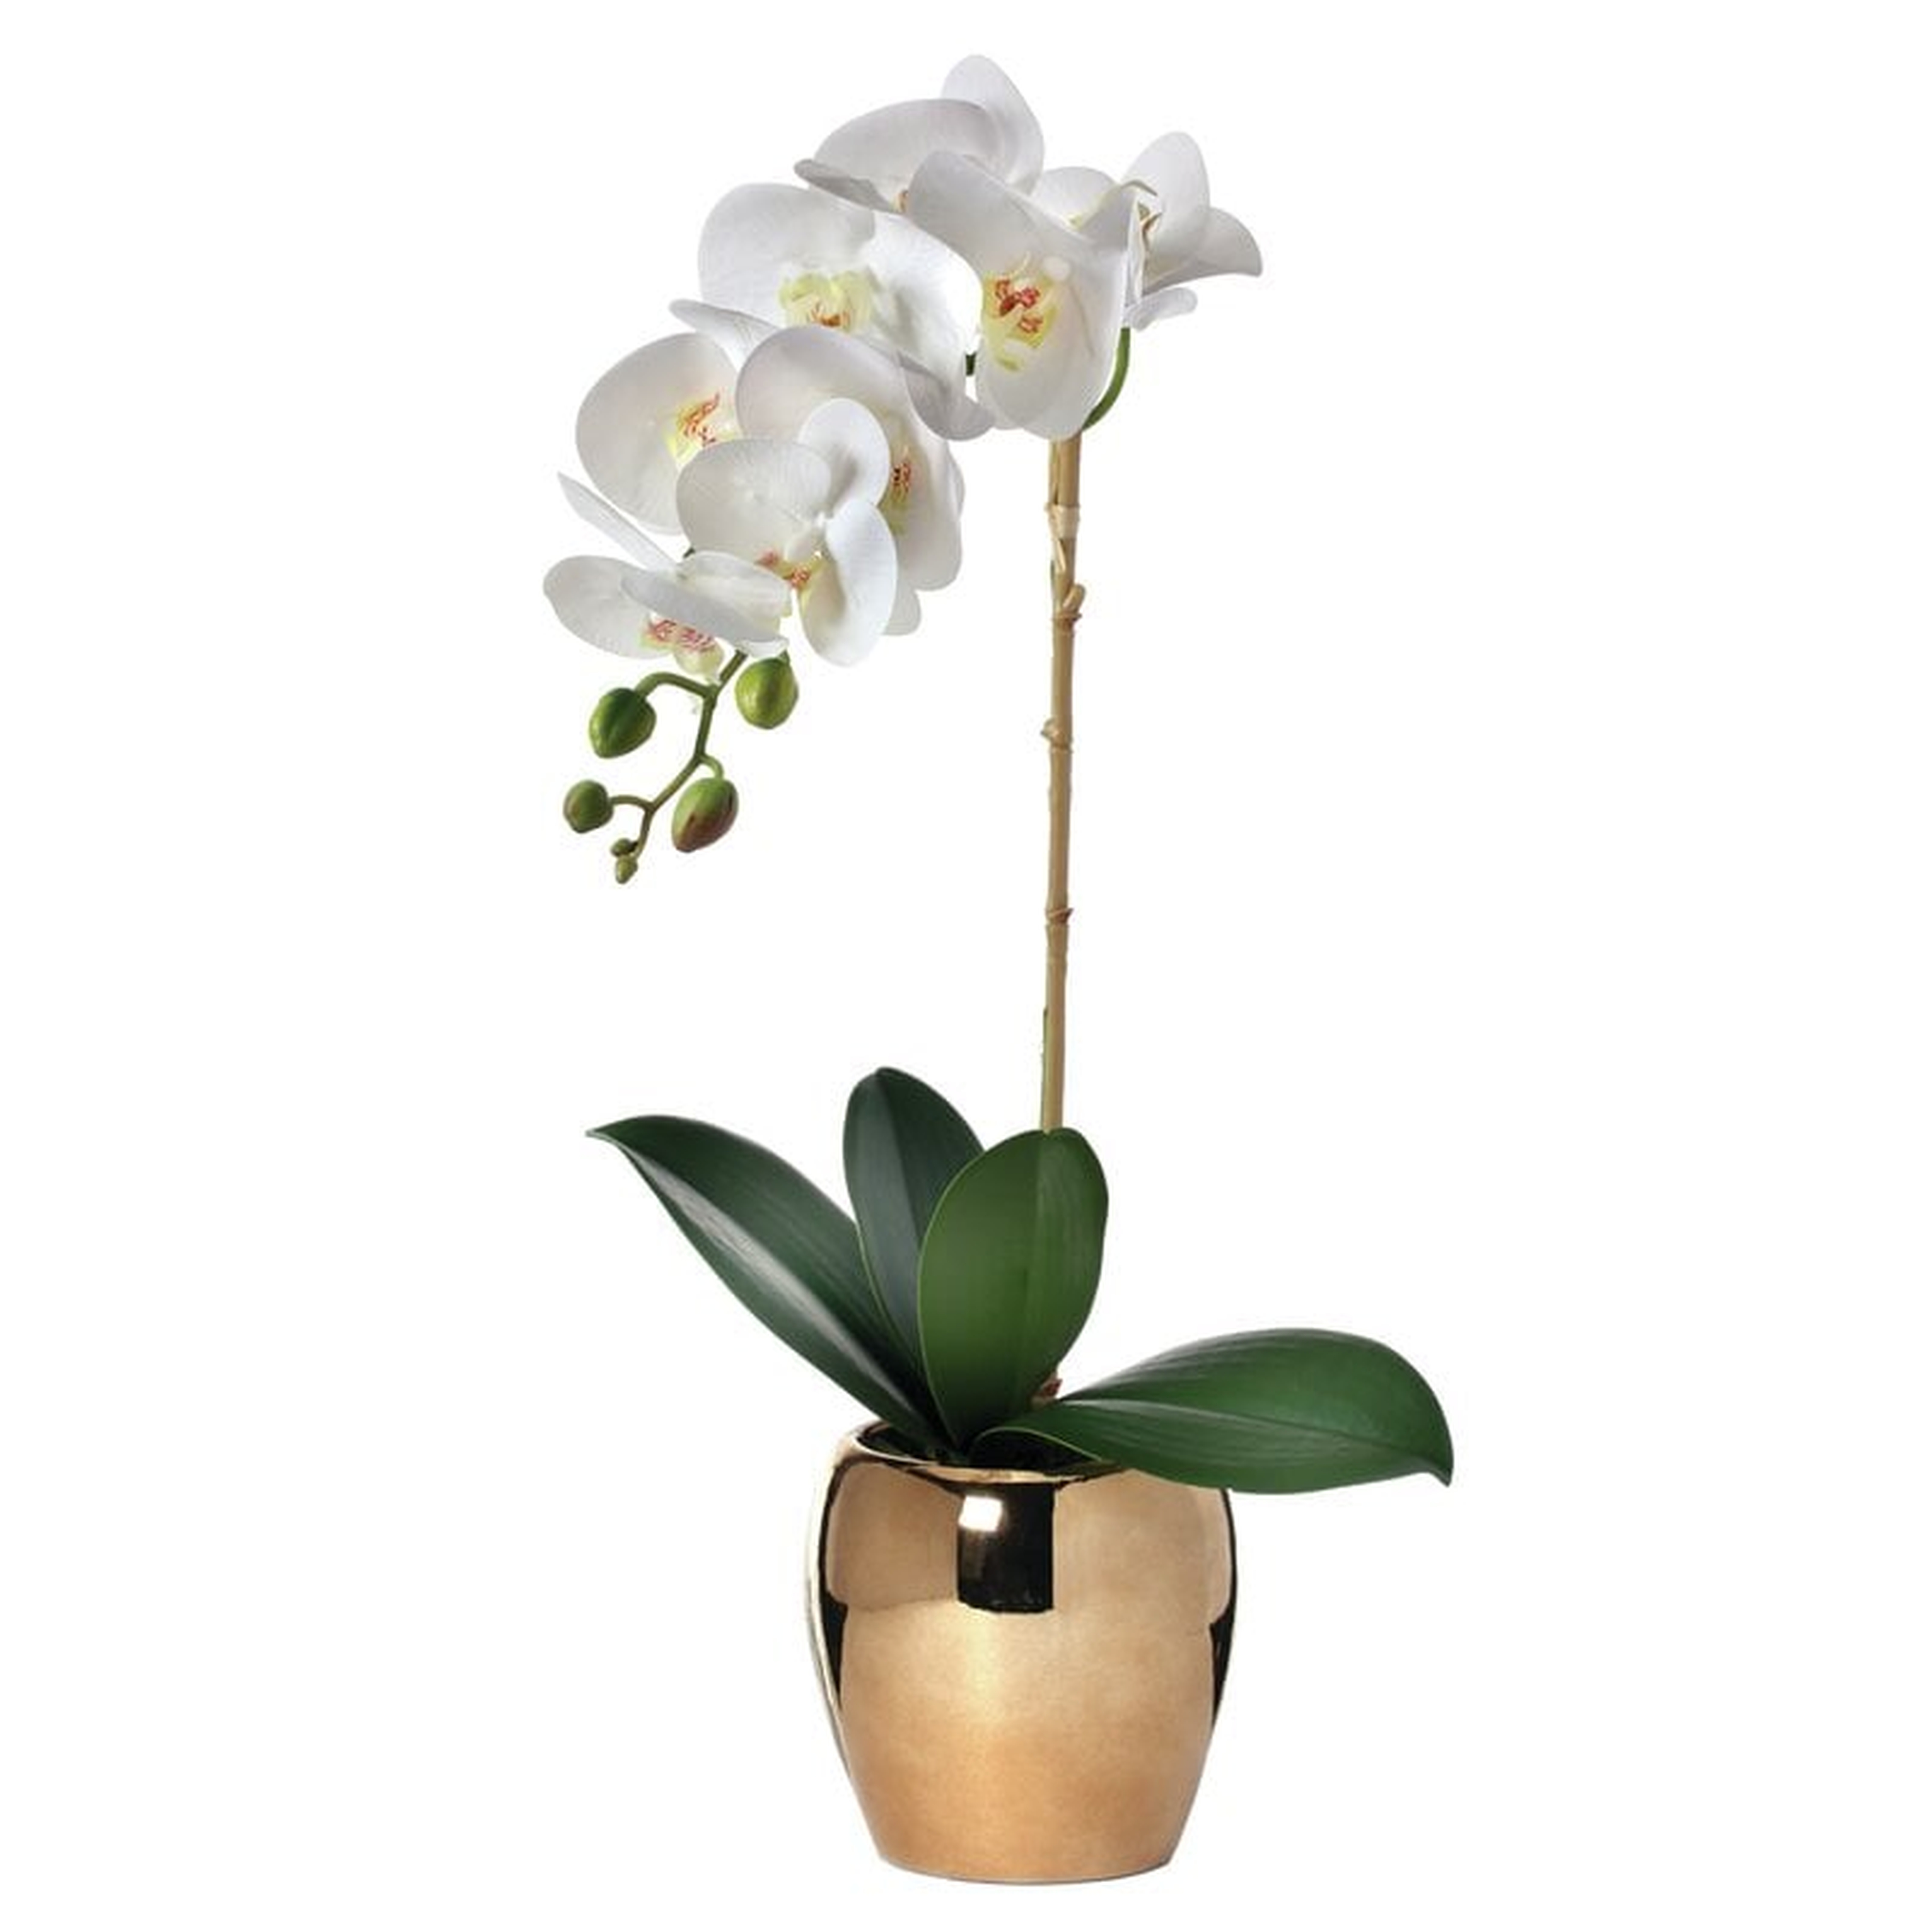 Orchid Floral Arrangement And Centerpiece In Vase - Wayfair